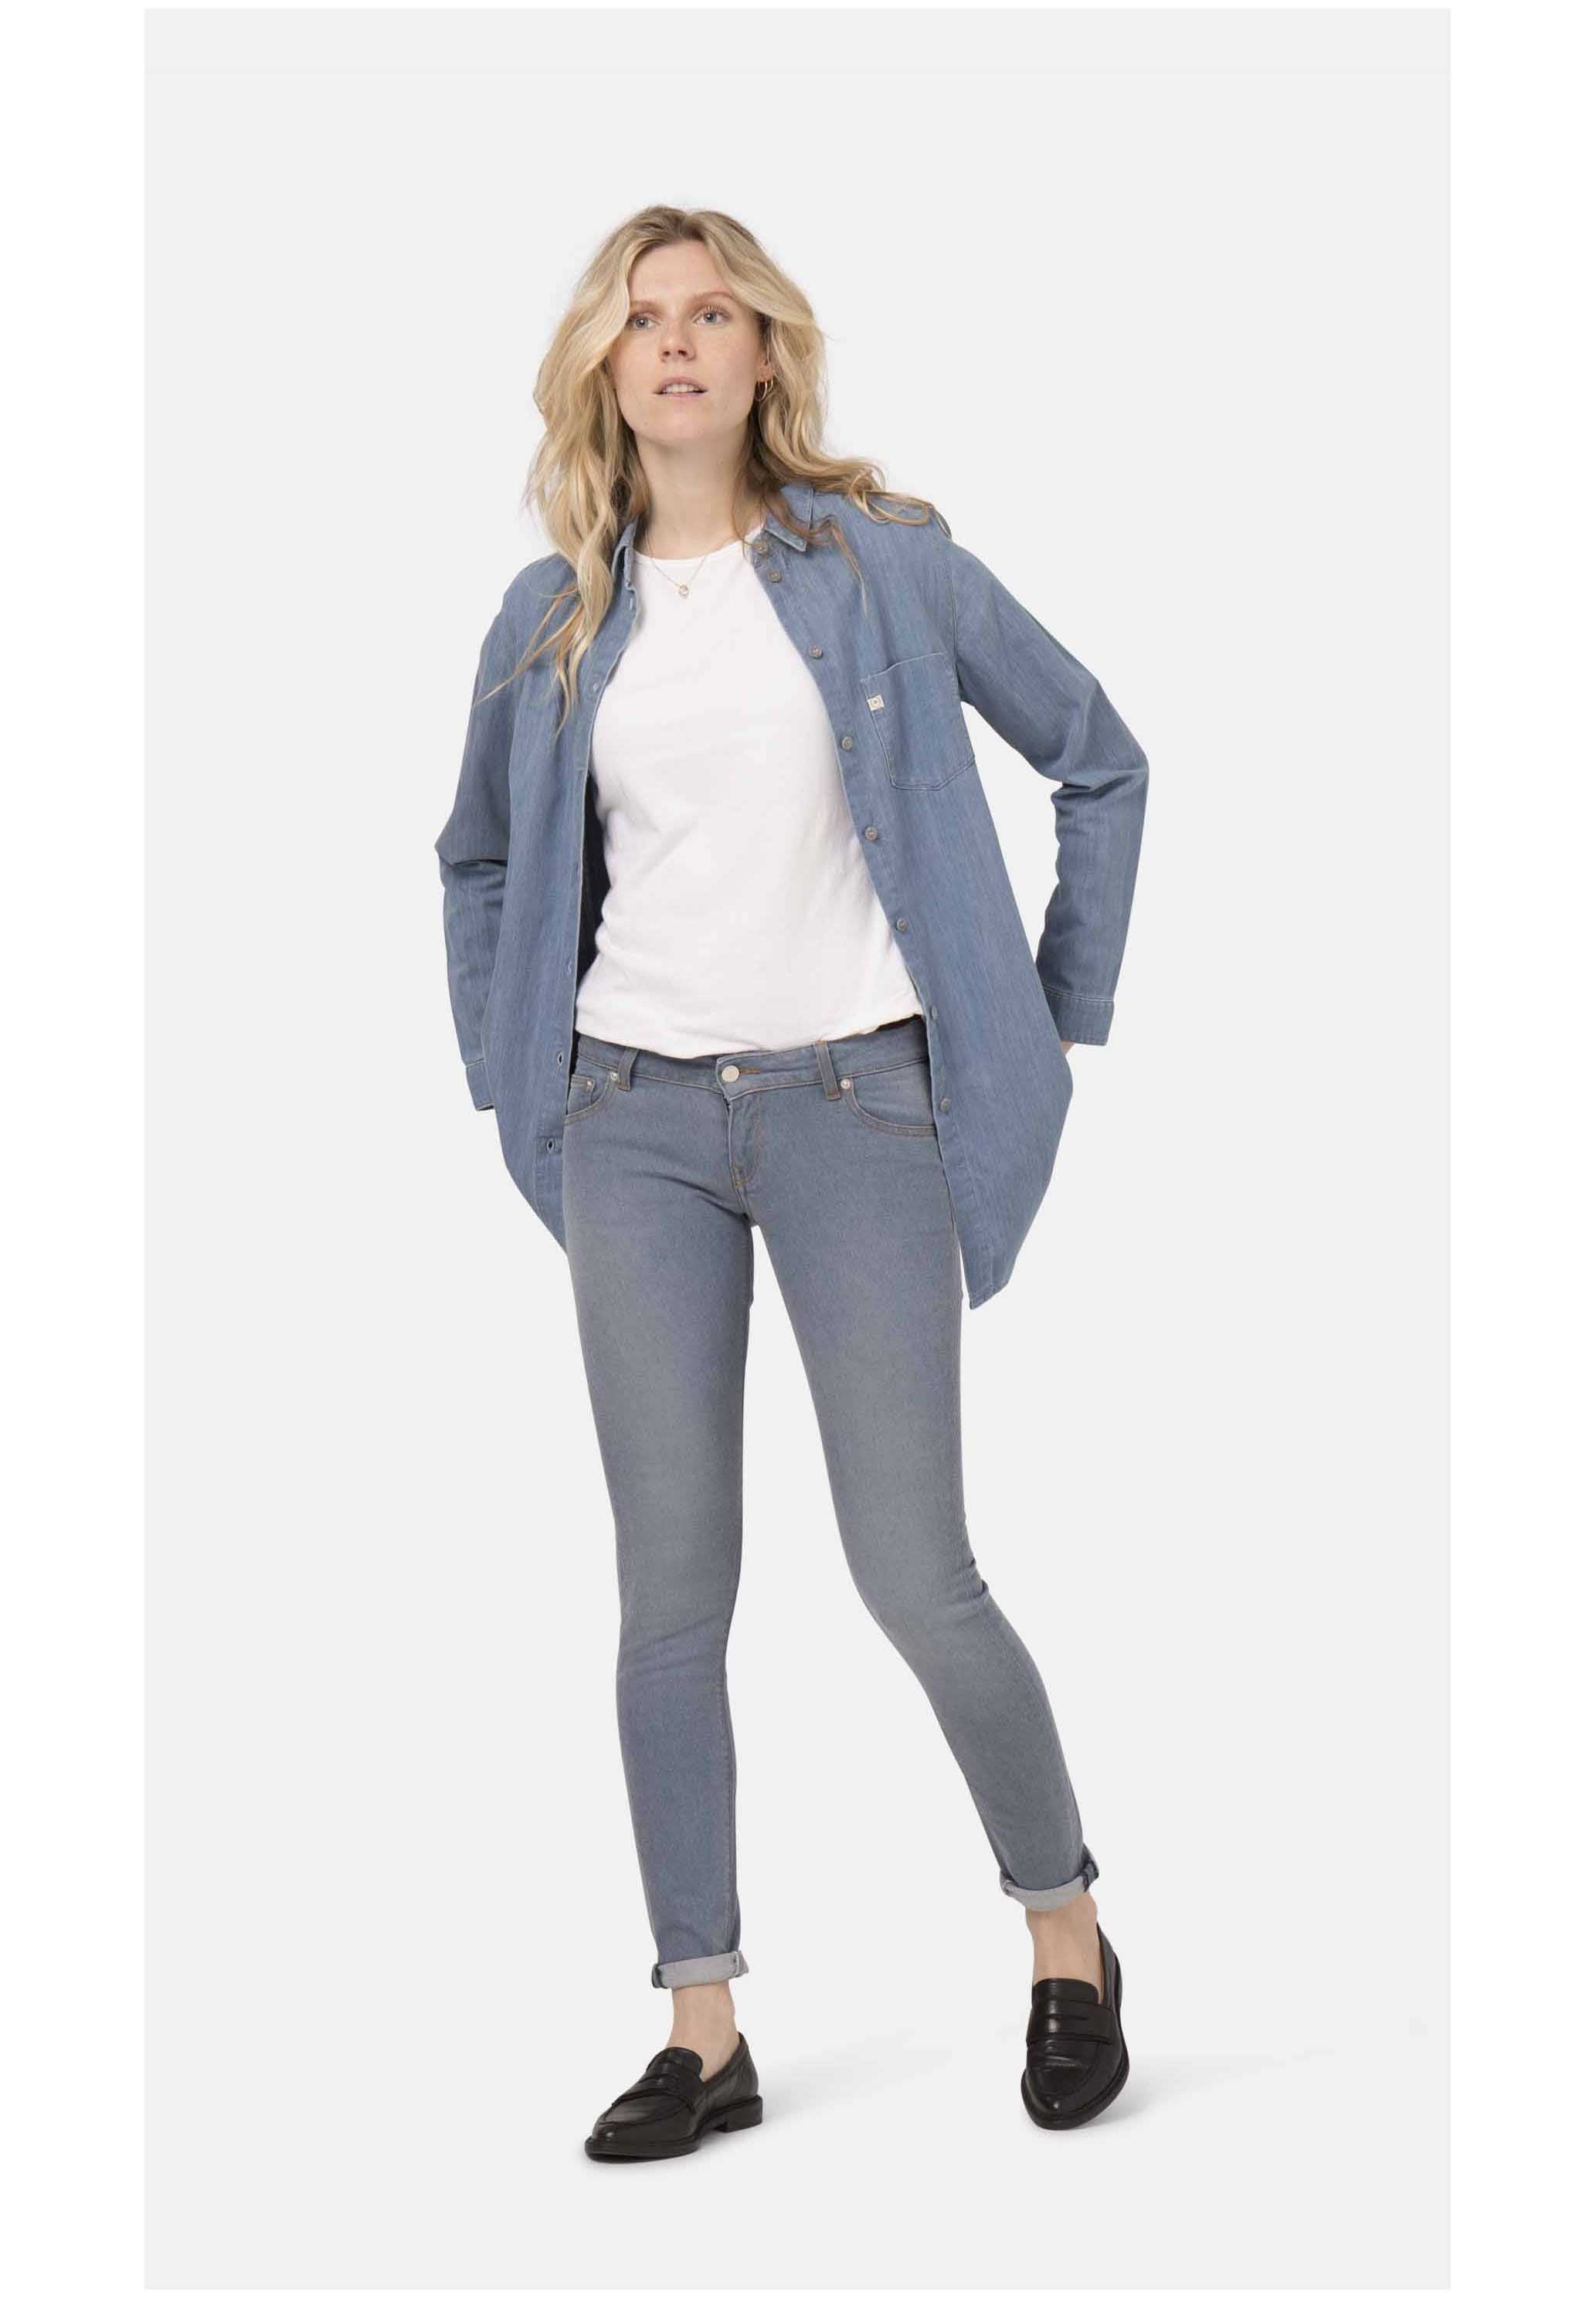 LILLY Womens skinny blue jeans by MUD, W29 / L30